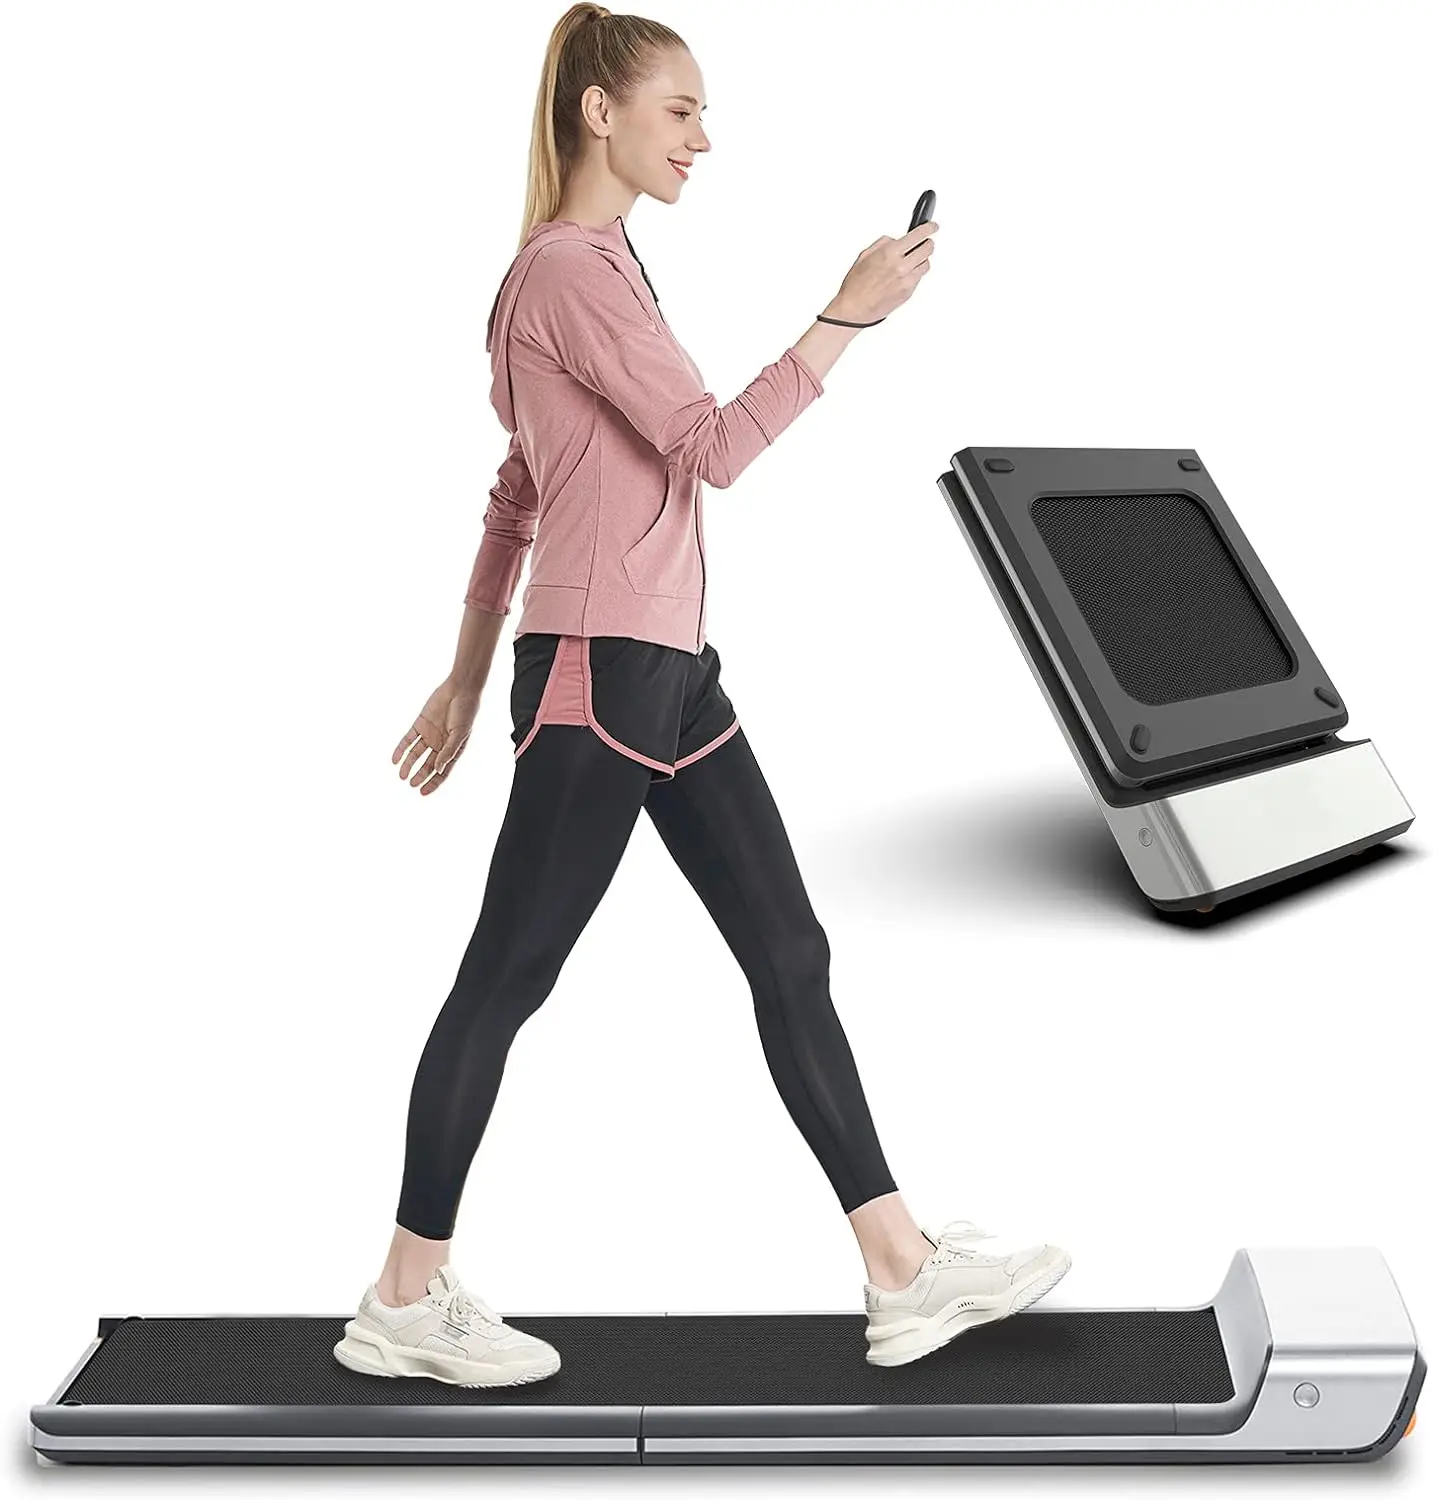 

Folding Treadmill, Ultra Slim Foldable Treadmill Smart Fold Walking Pad Portable Safety Non Holder Gym and Running De